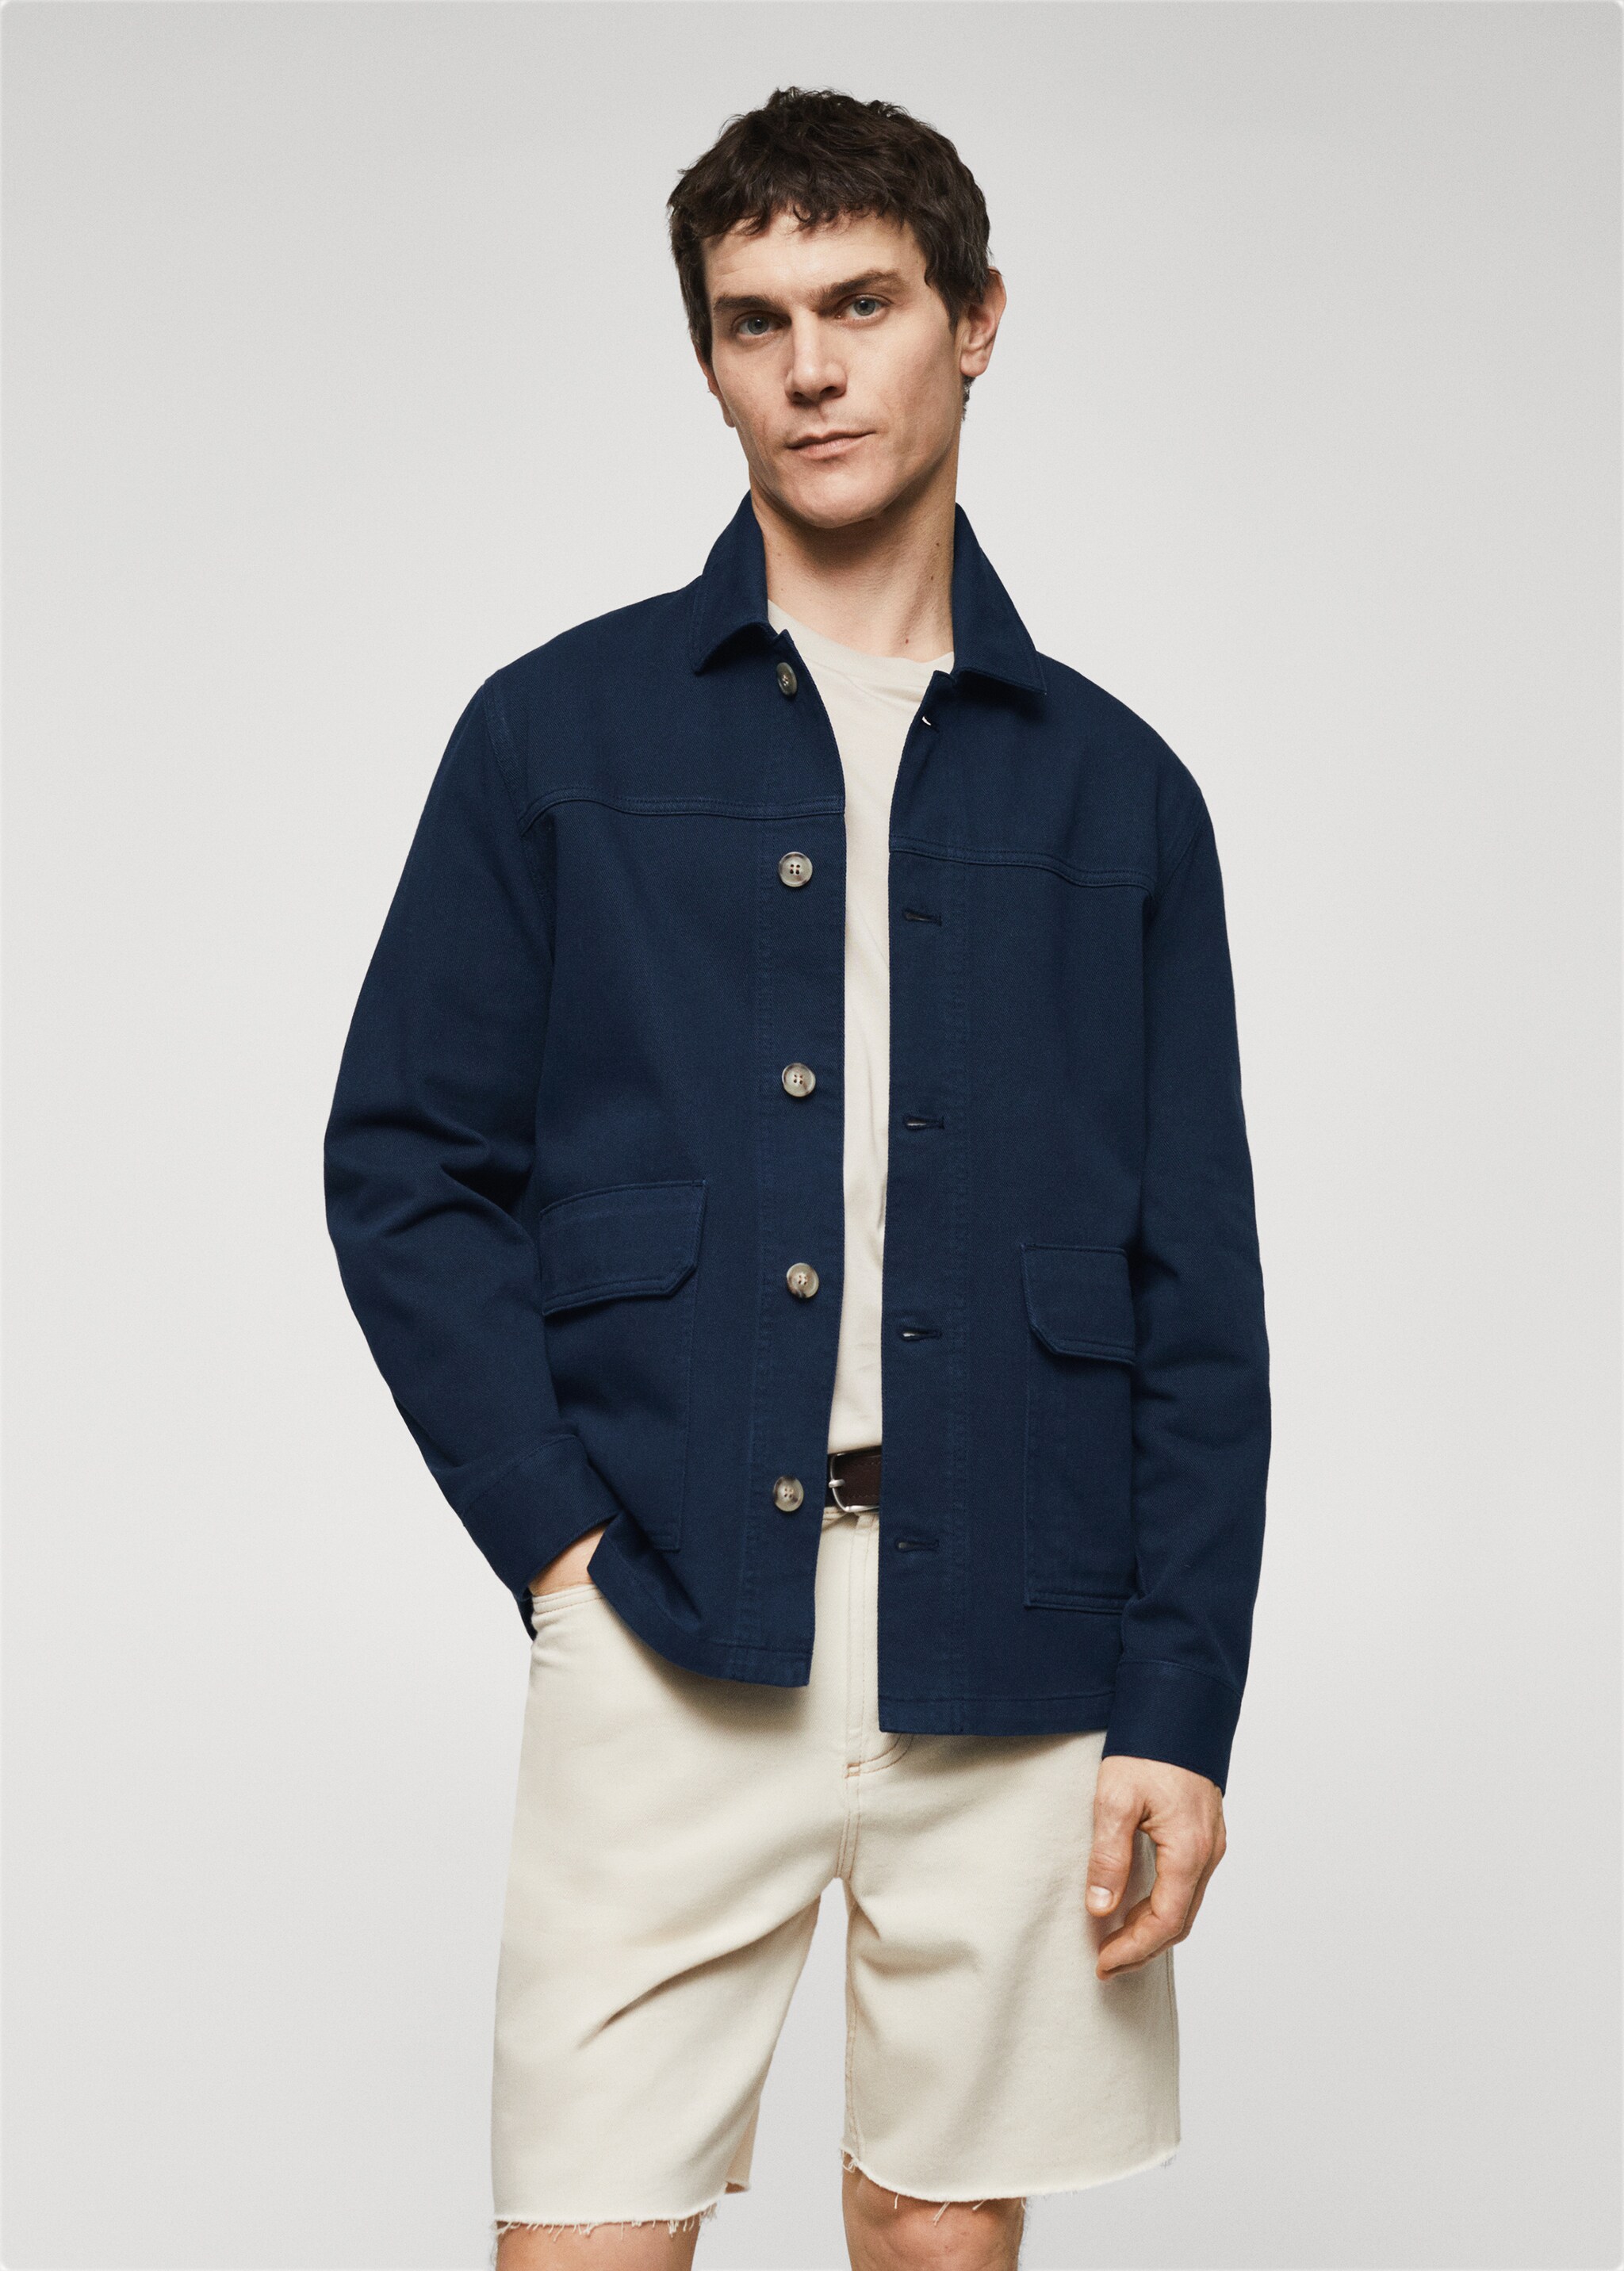 100% cotton overshirt with pockets - Medium plane